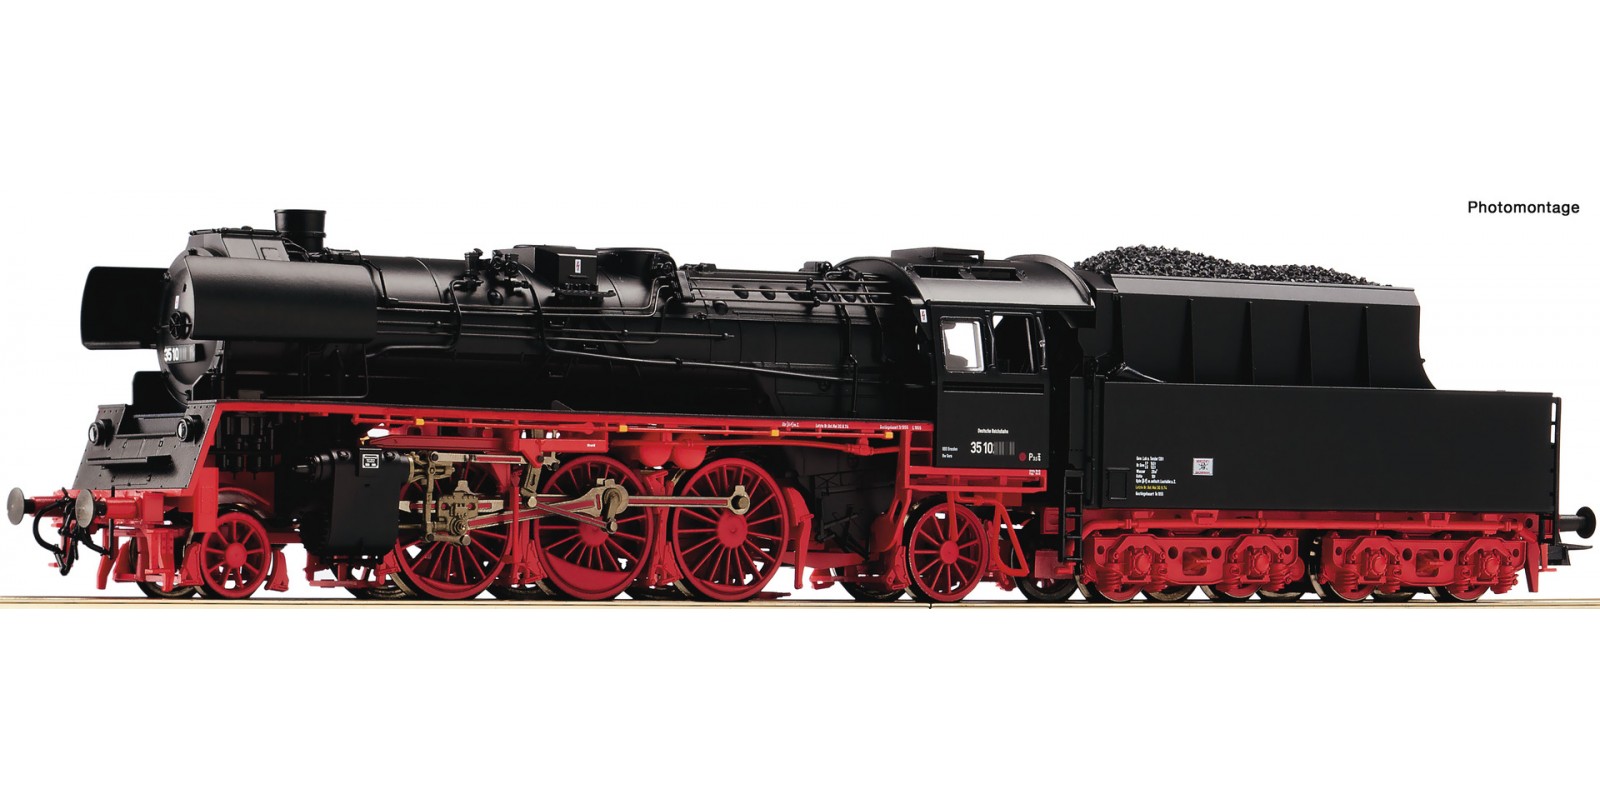 RO72148 - Steam locomotive class 35.10, DR